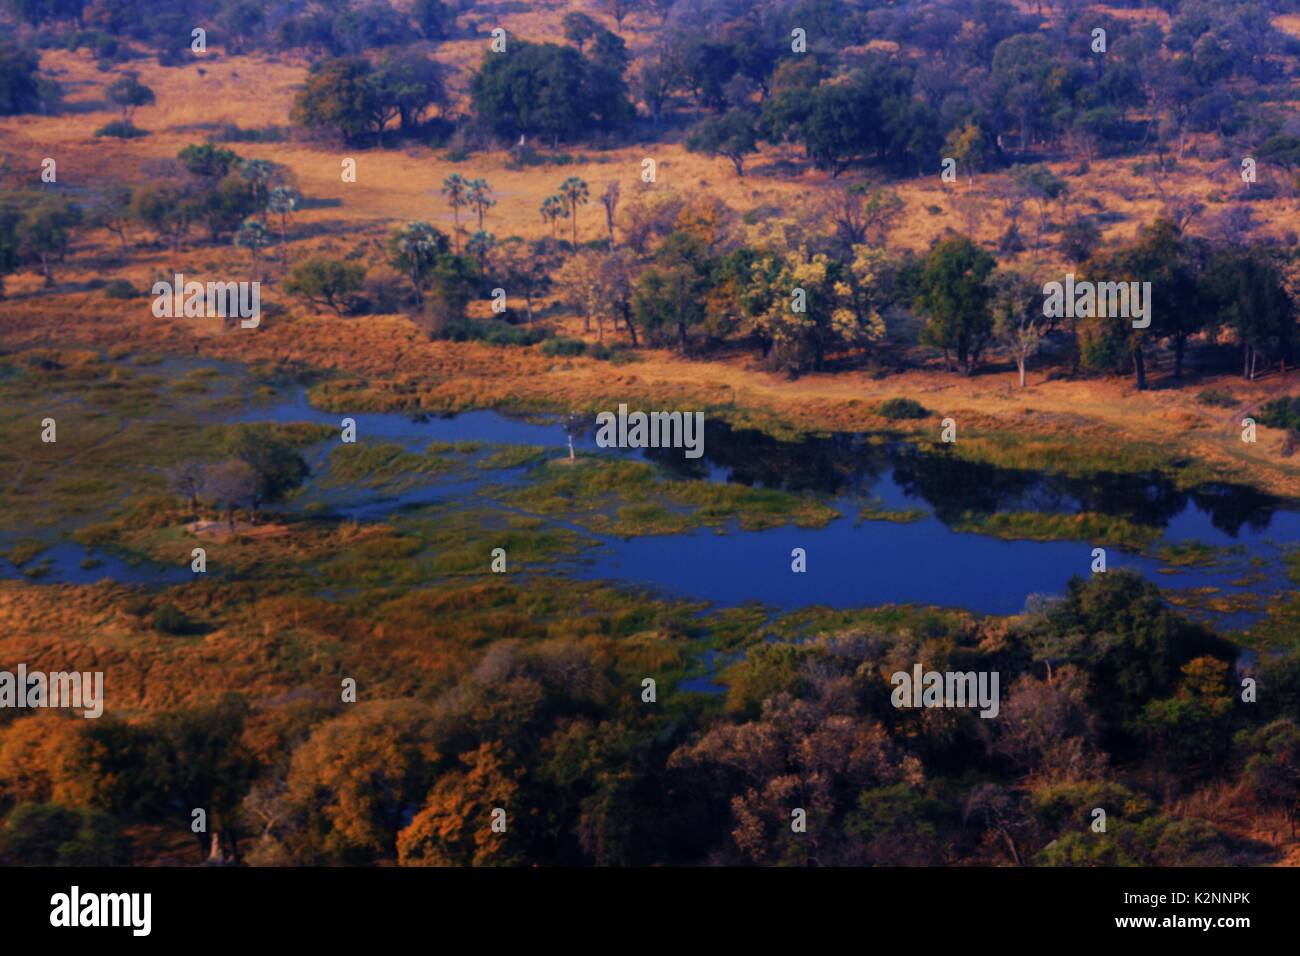 Aerial view of the wetland in the Okavango Delta, Botswana Stock Photo